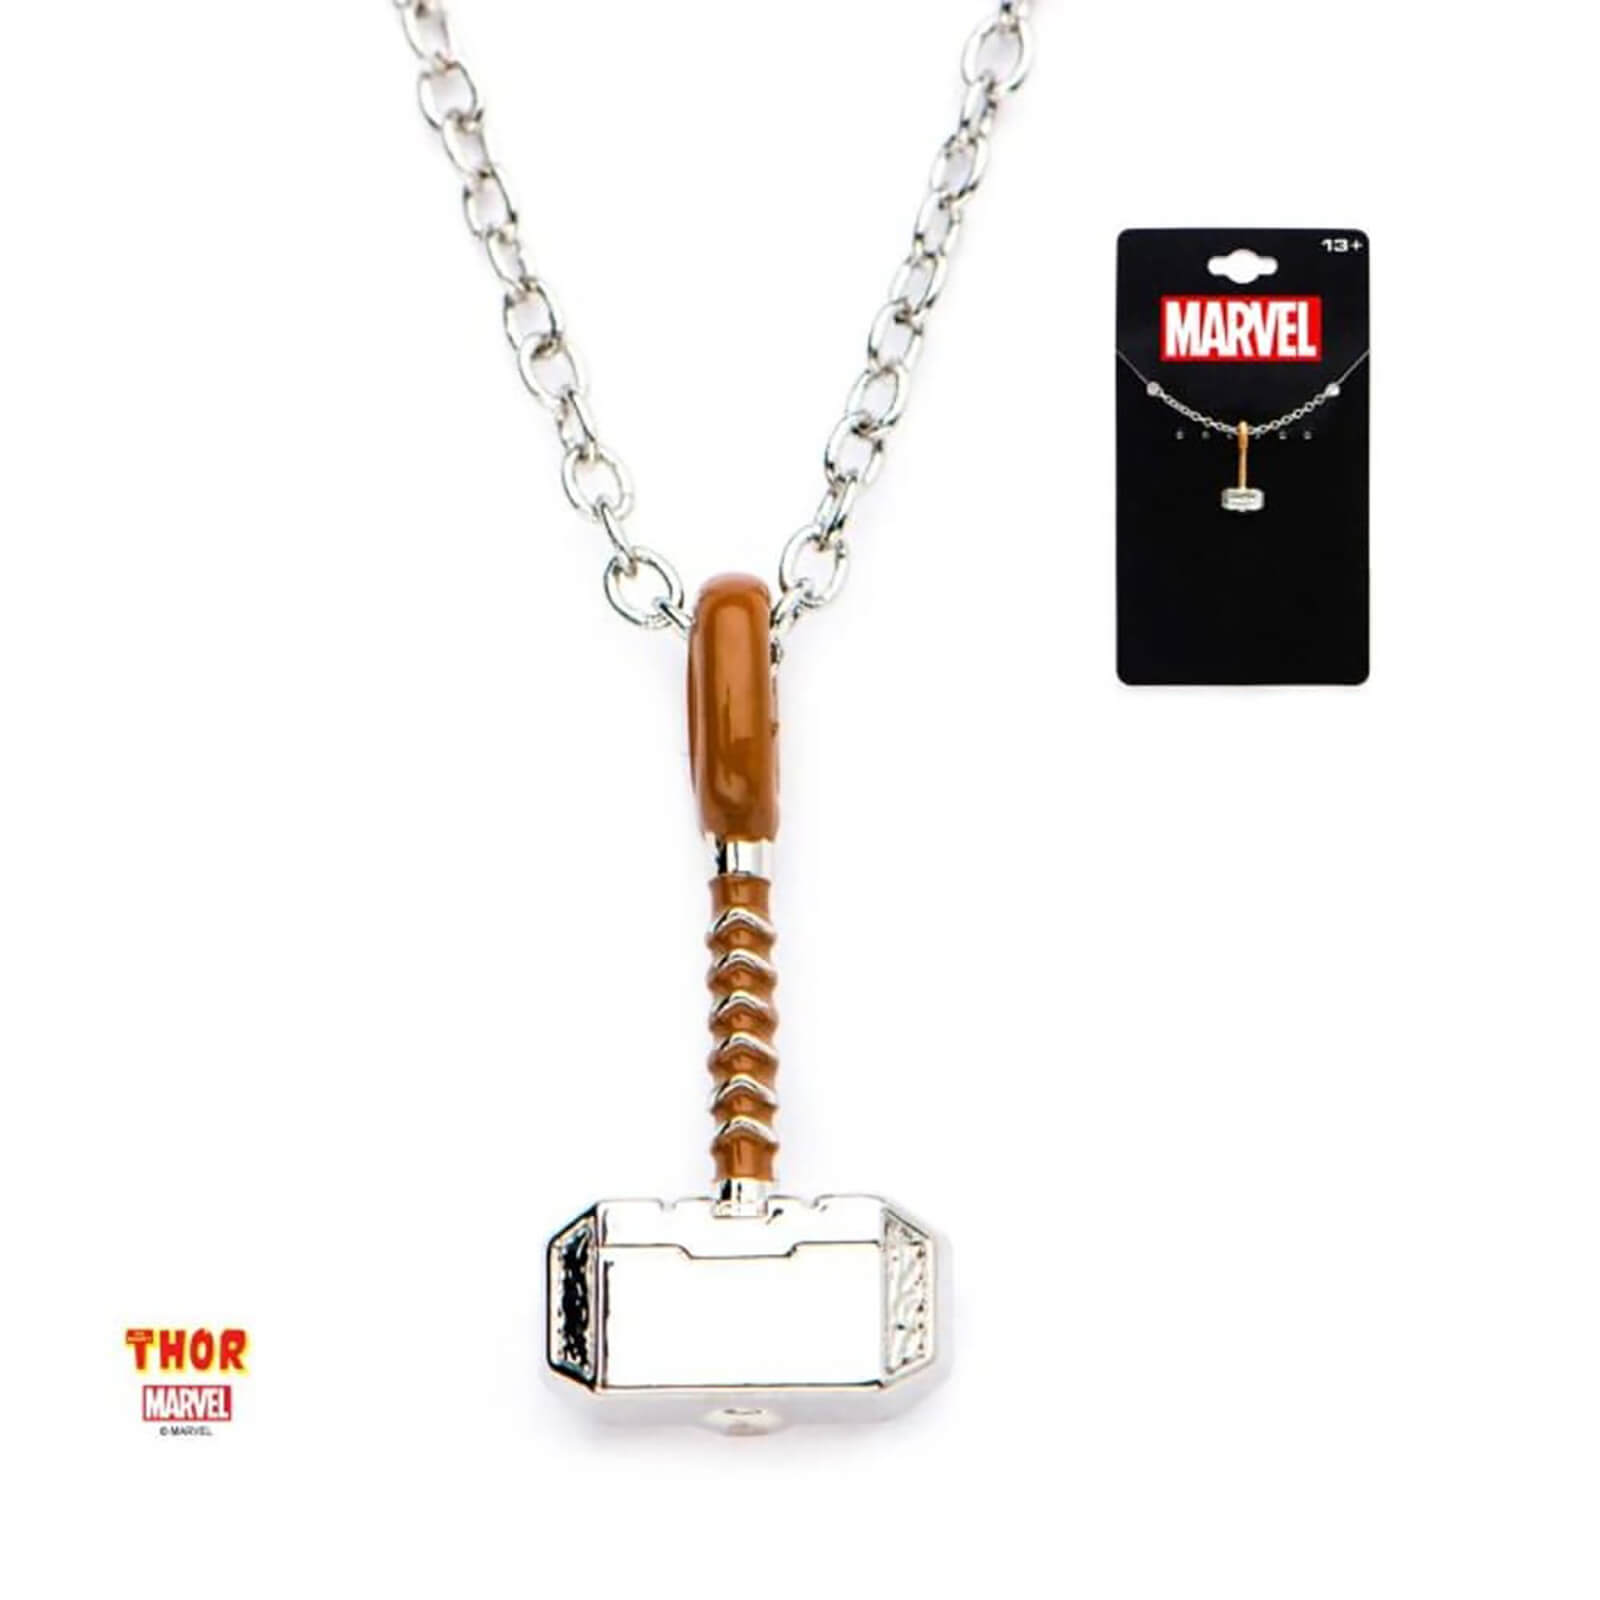 Marvel Thor Hammer Pendant Necklace